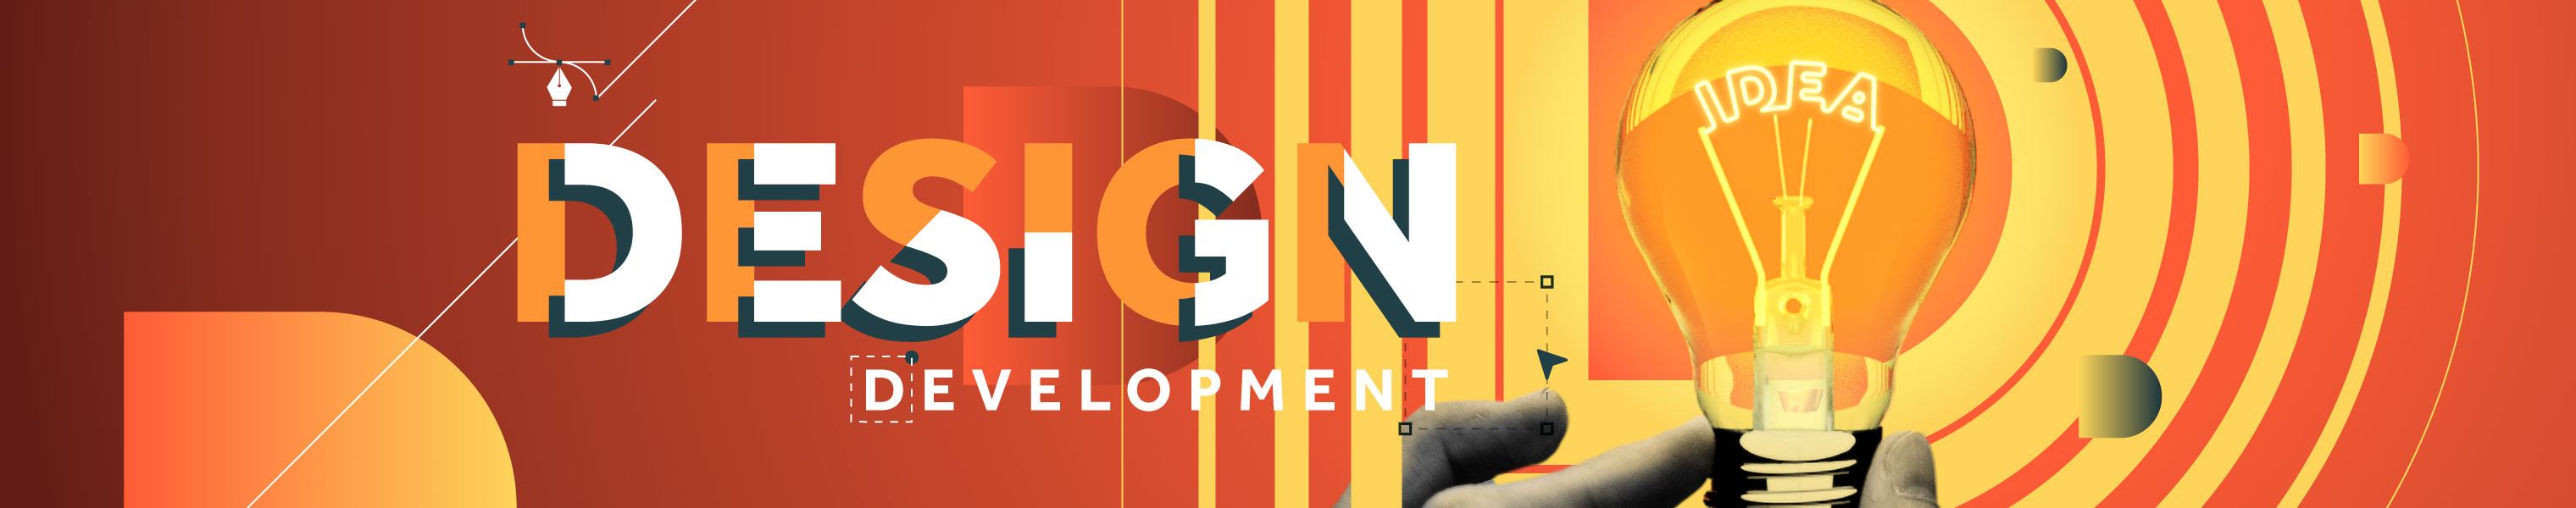 Brand Design & Development Services | HK Advertising Agency